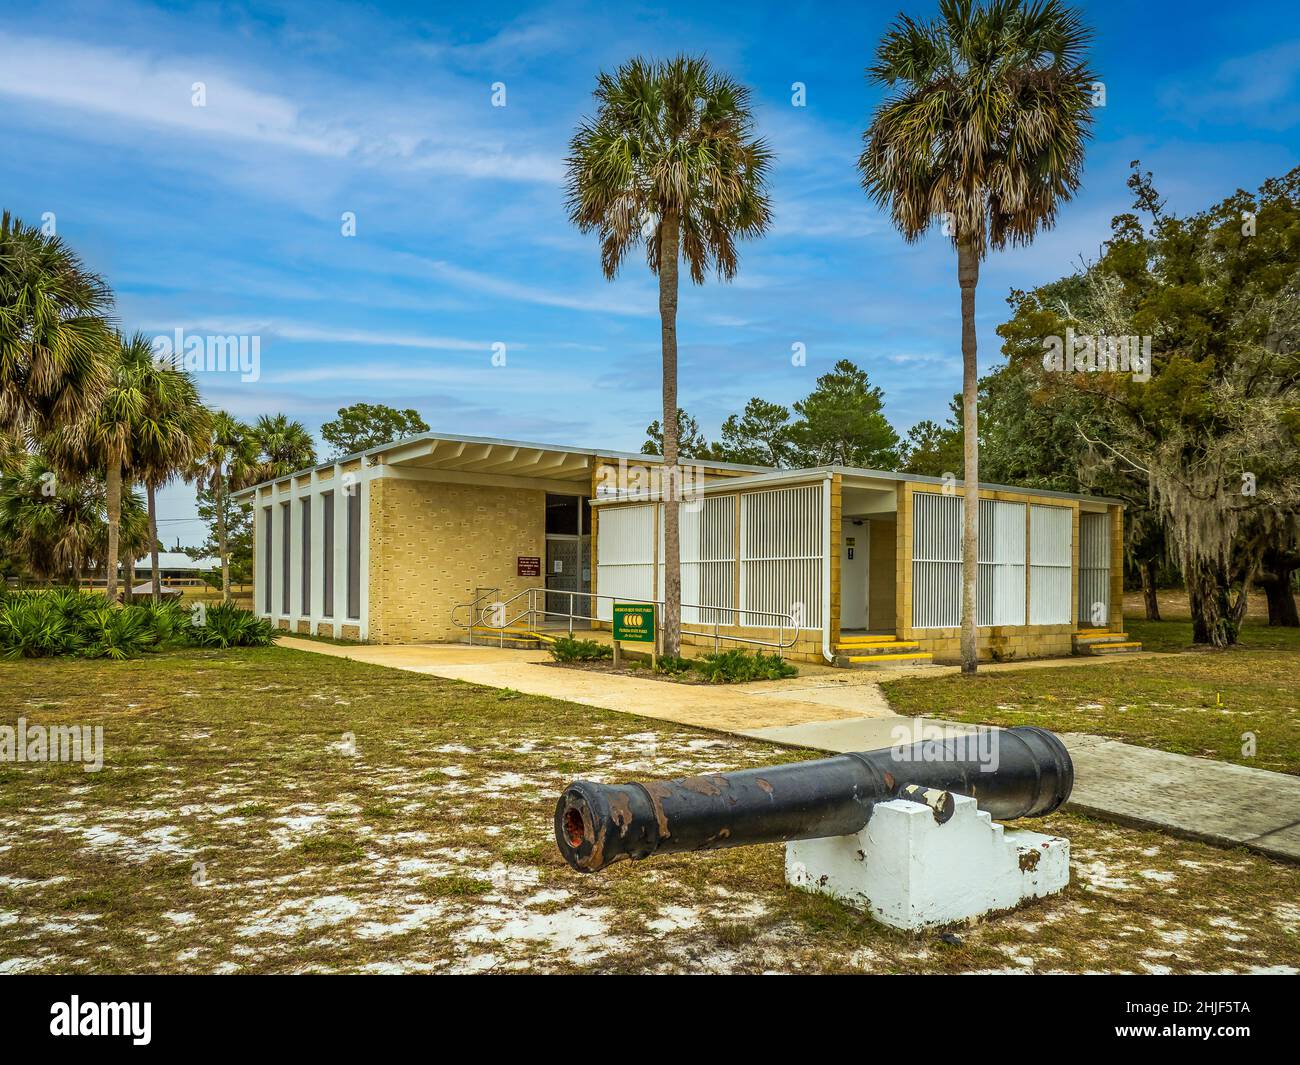 Ceadr Key Museum State Park on Cedar Key Florida USA Stock Photo